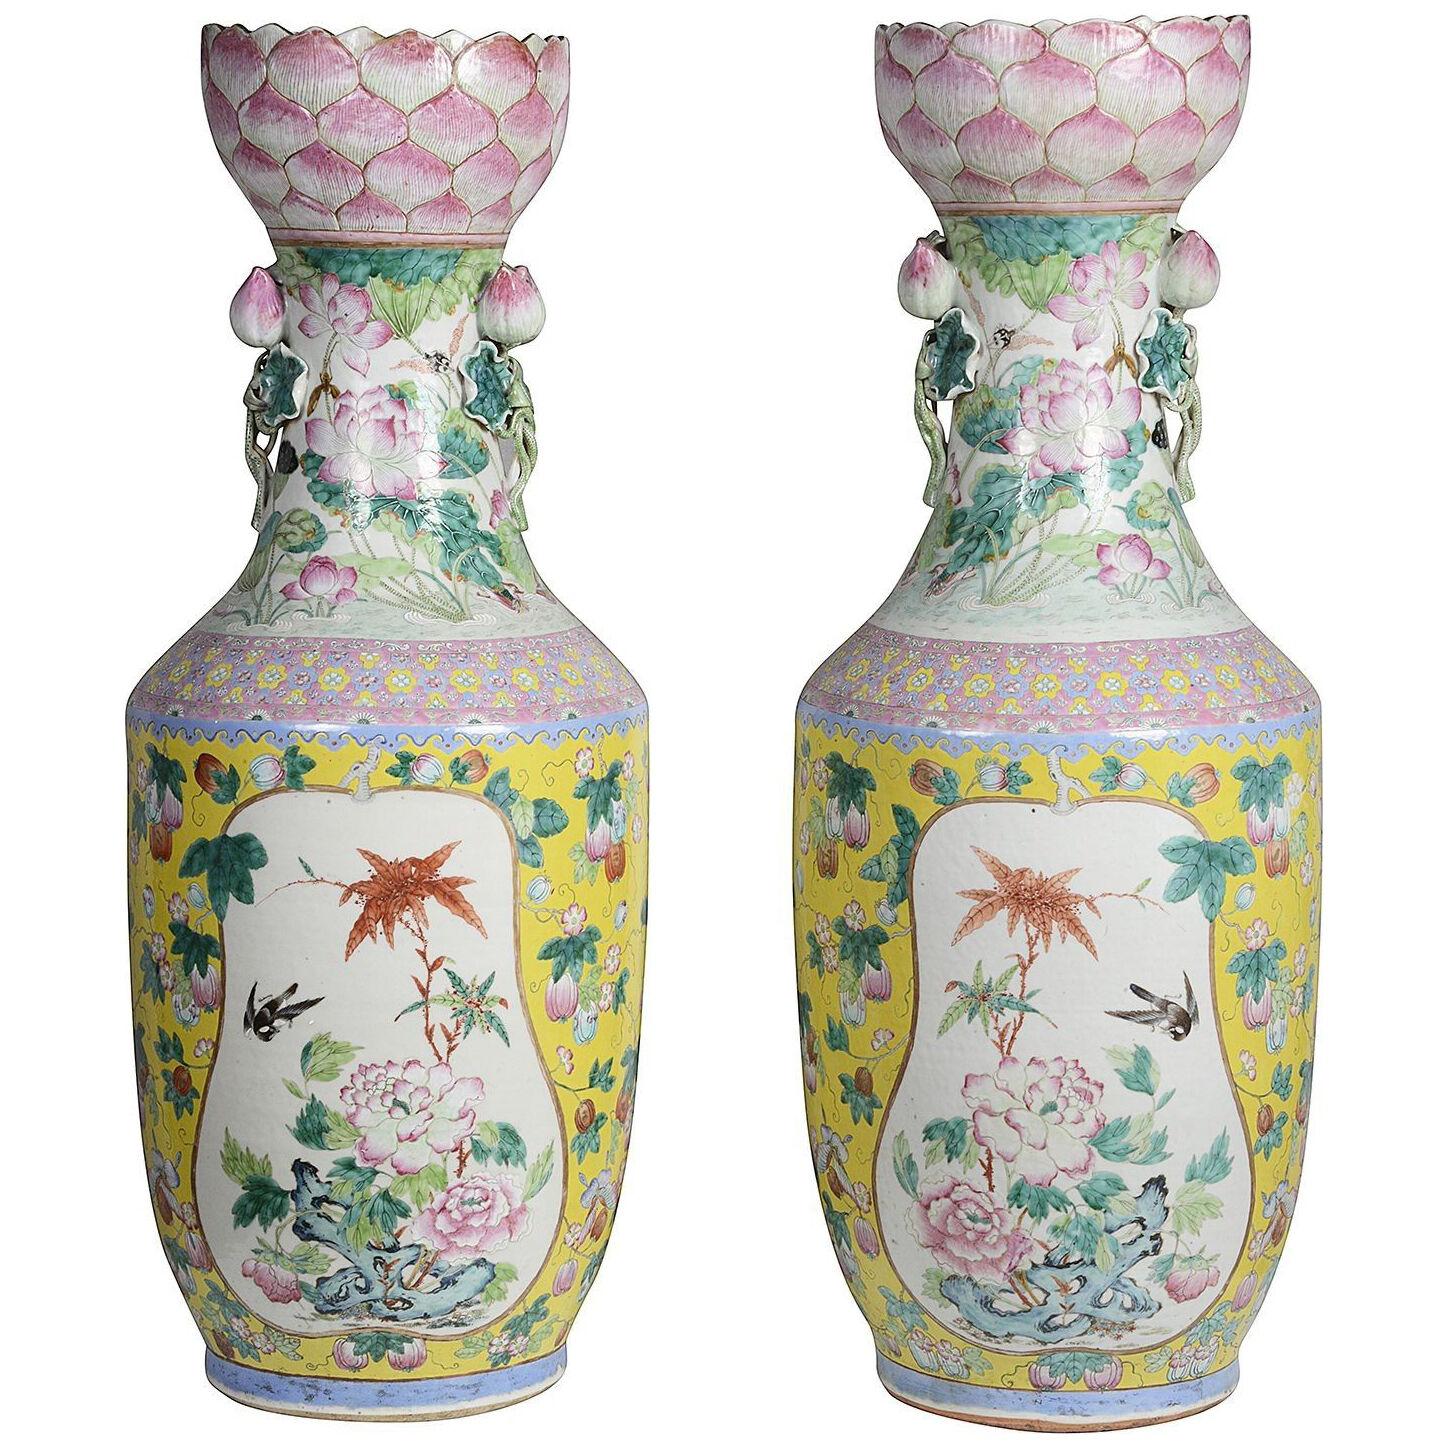 Rare pair of 19th Century Chinese Famille Rose vases 92cm (36")